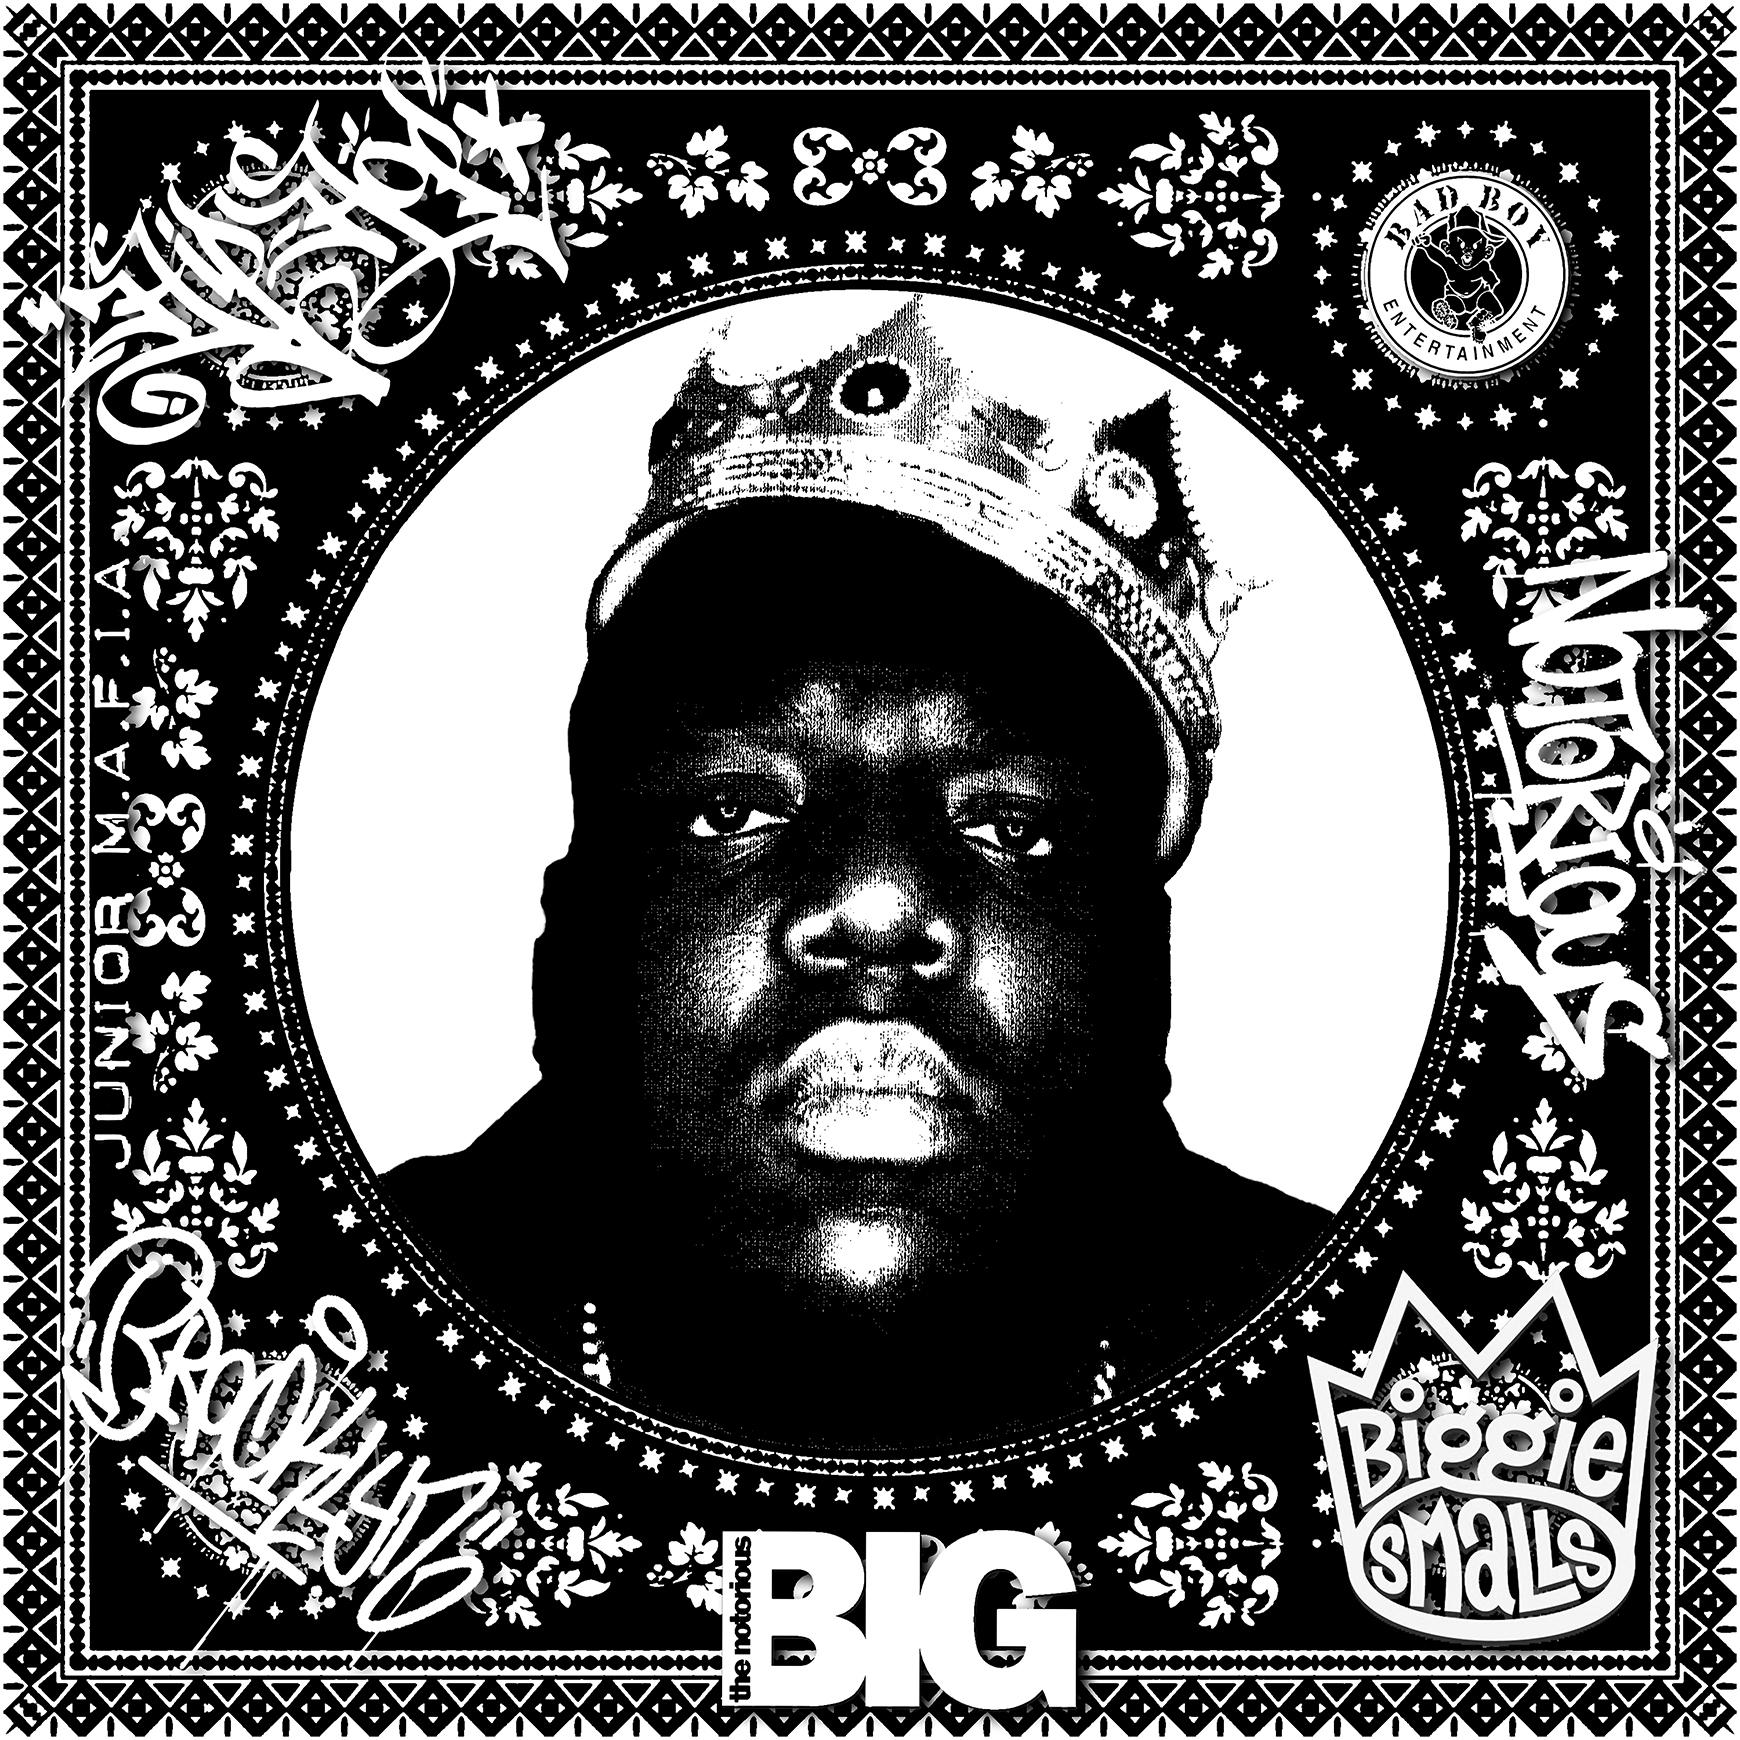 Agent X Figurative Print - Notorious B.I.G (Black & White) (50 Years, Hip Hop, Rap, Iconic, Artist)